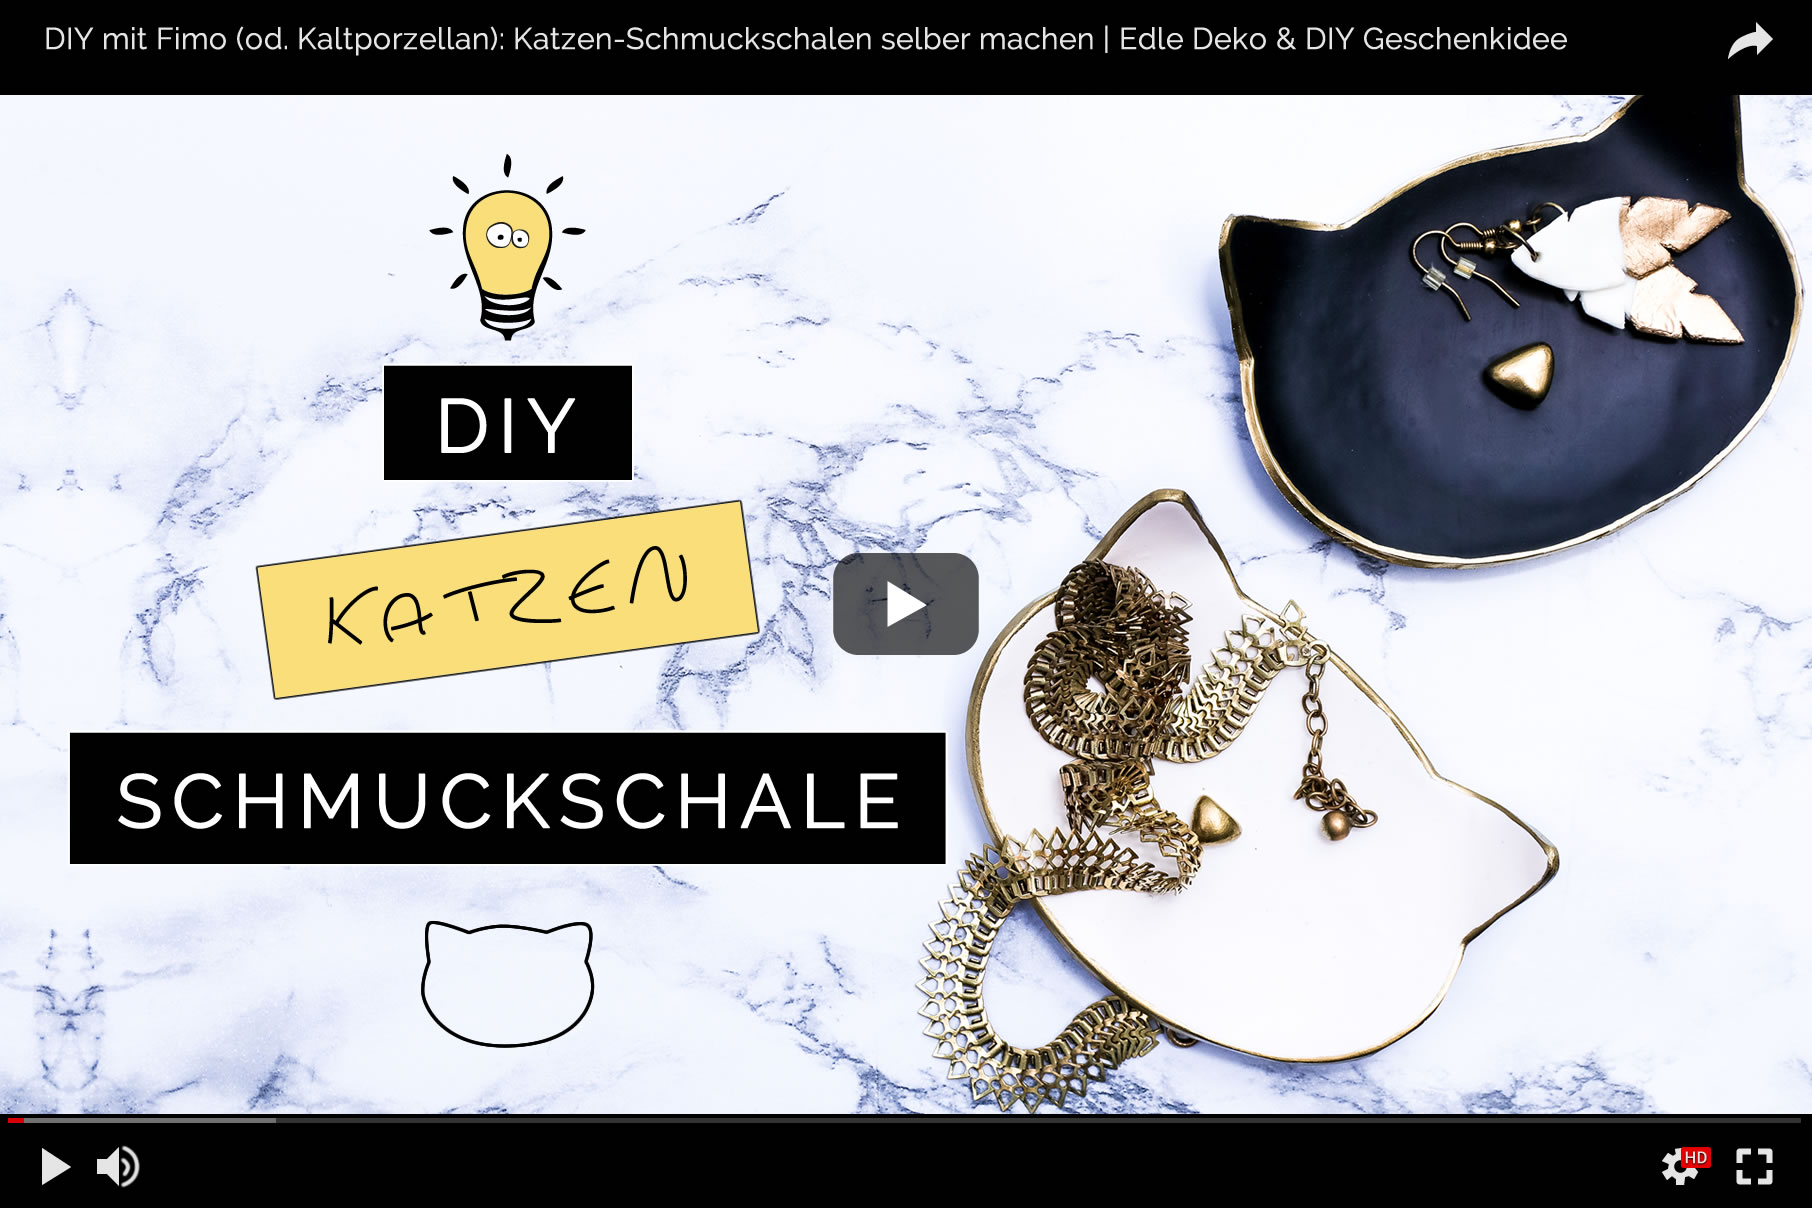 Katzen-Schmuckschalen aus Fimo selber machen | DIY Deko & Geschenkidee | Filizity.com | DIY-Blog aus dem Rheinland #fimo